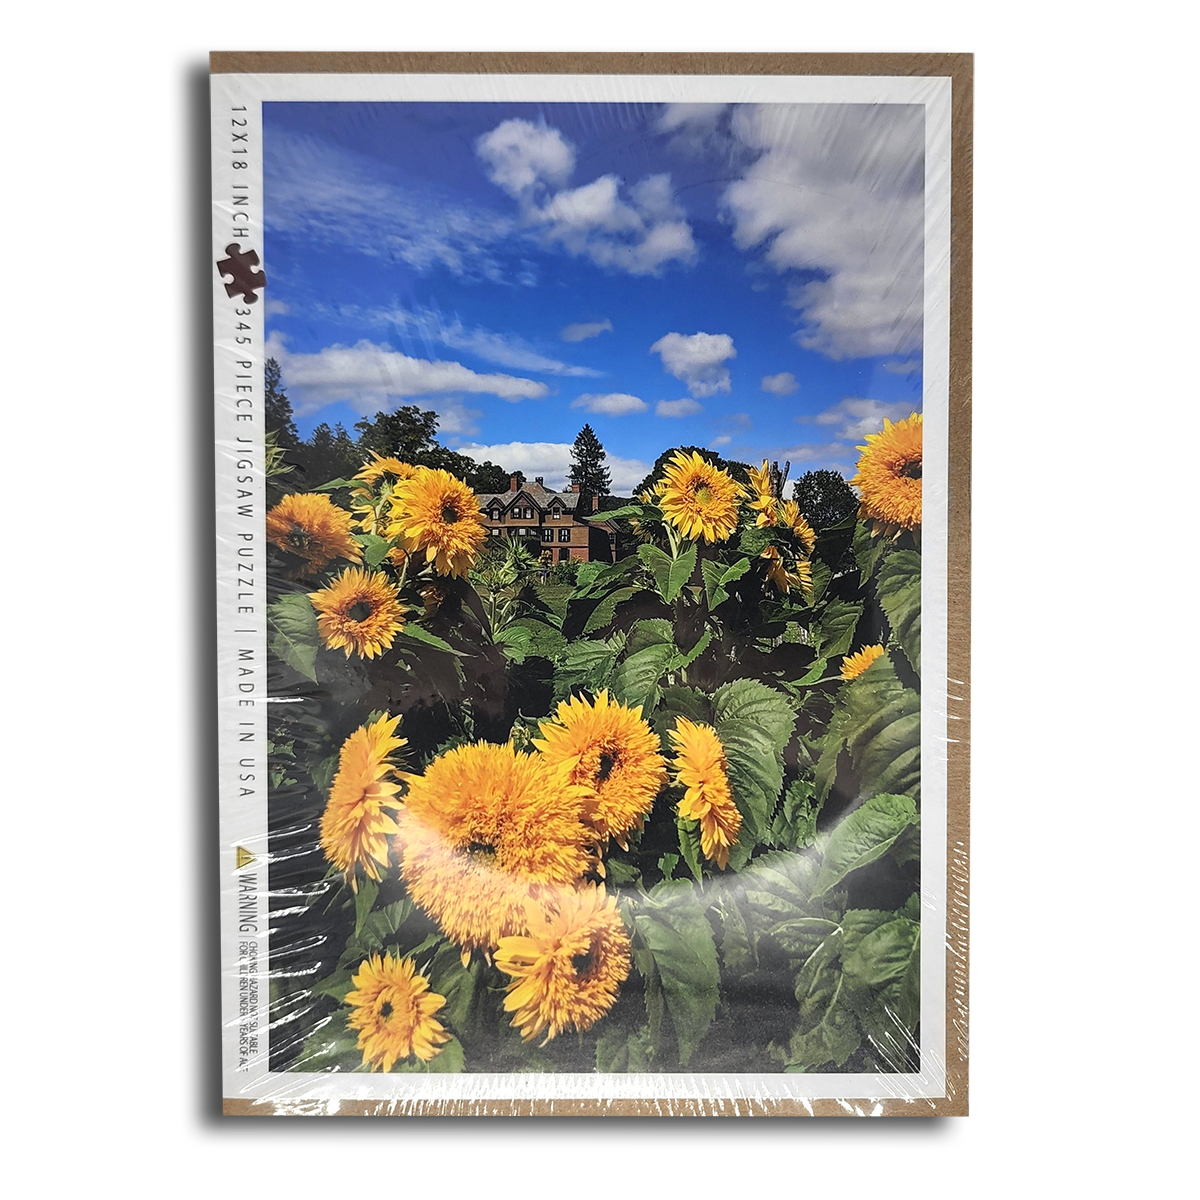 Sunflowers at Billings Farm & Museum Puzzle